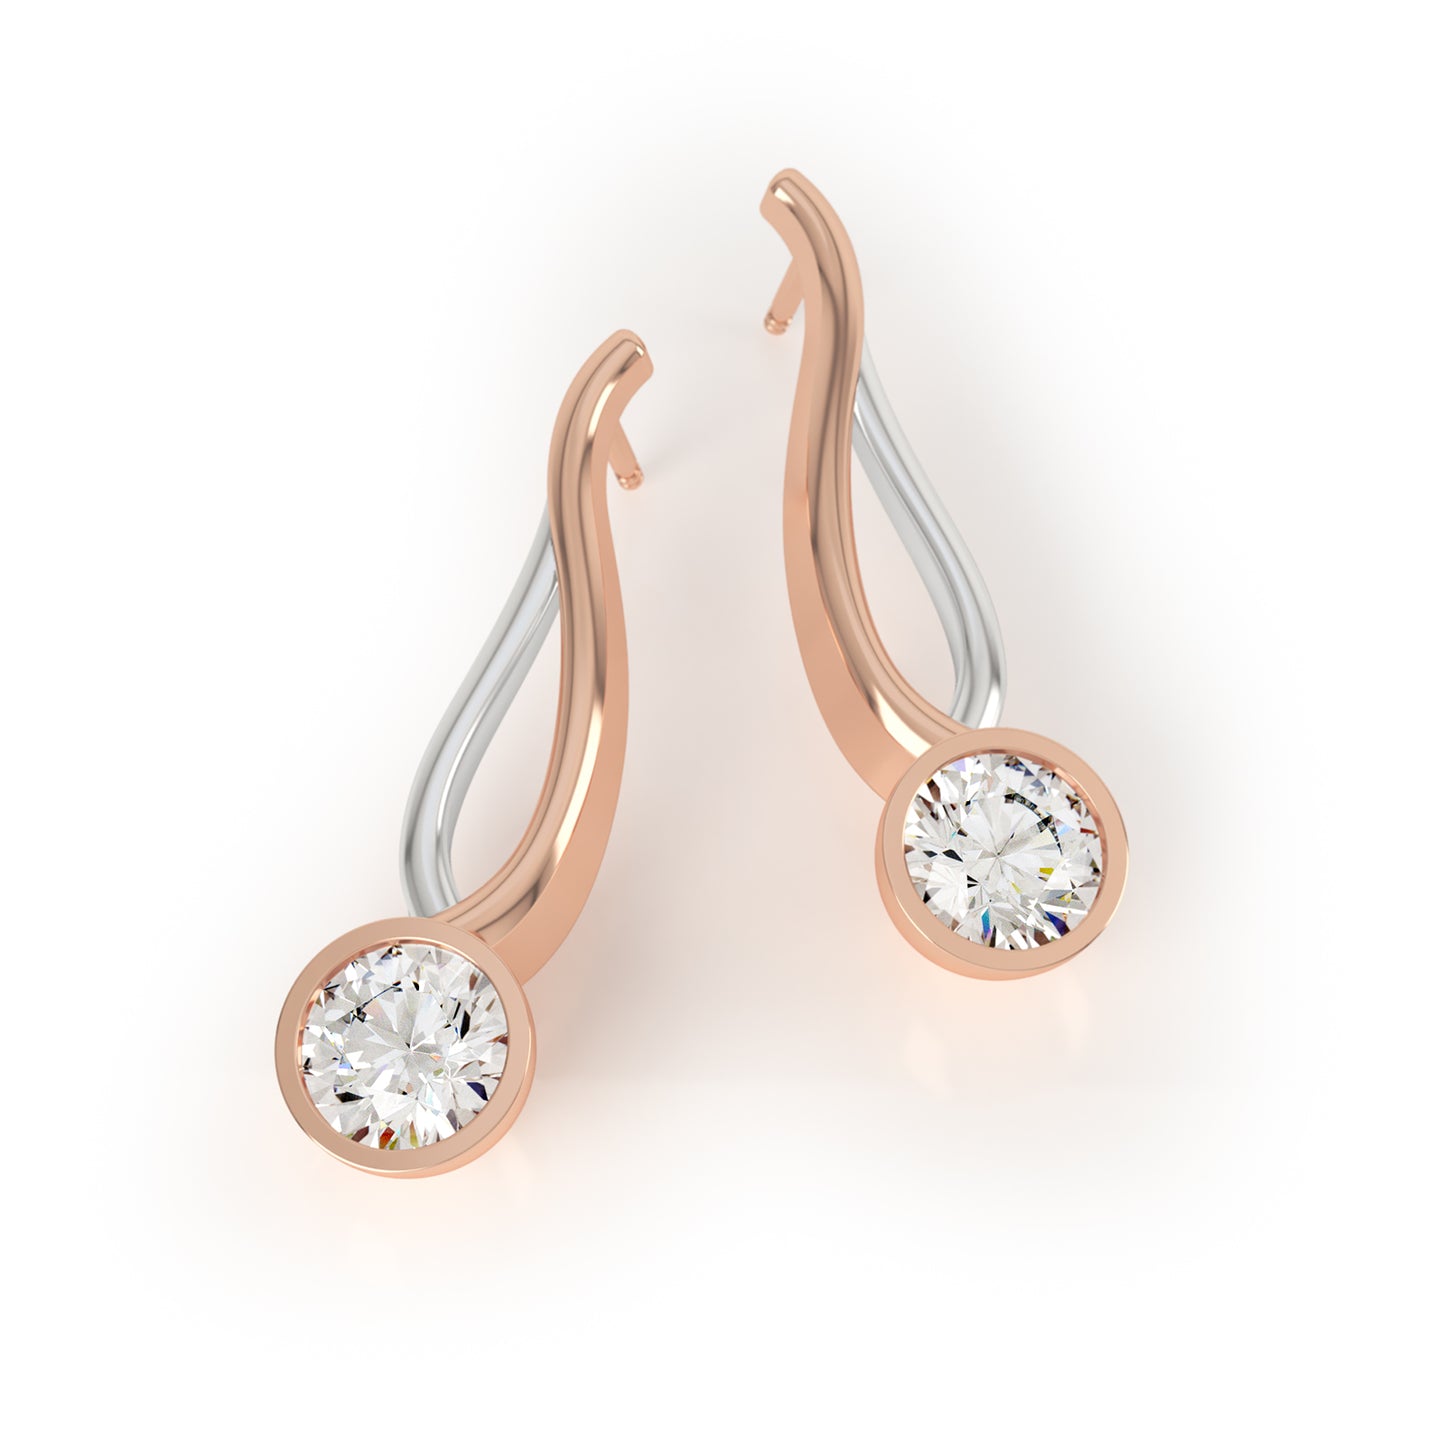 TWYN 2ct Avant Garde Designer Diamond Drop Earrings in 18k Rose and White Gold